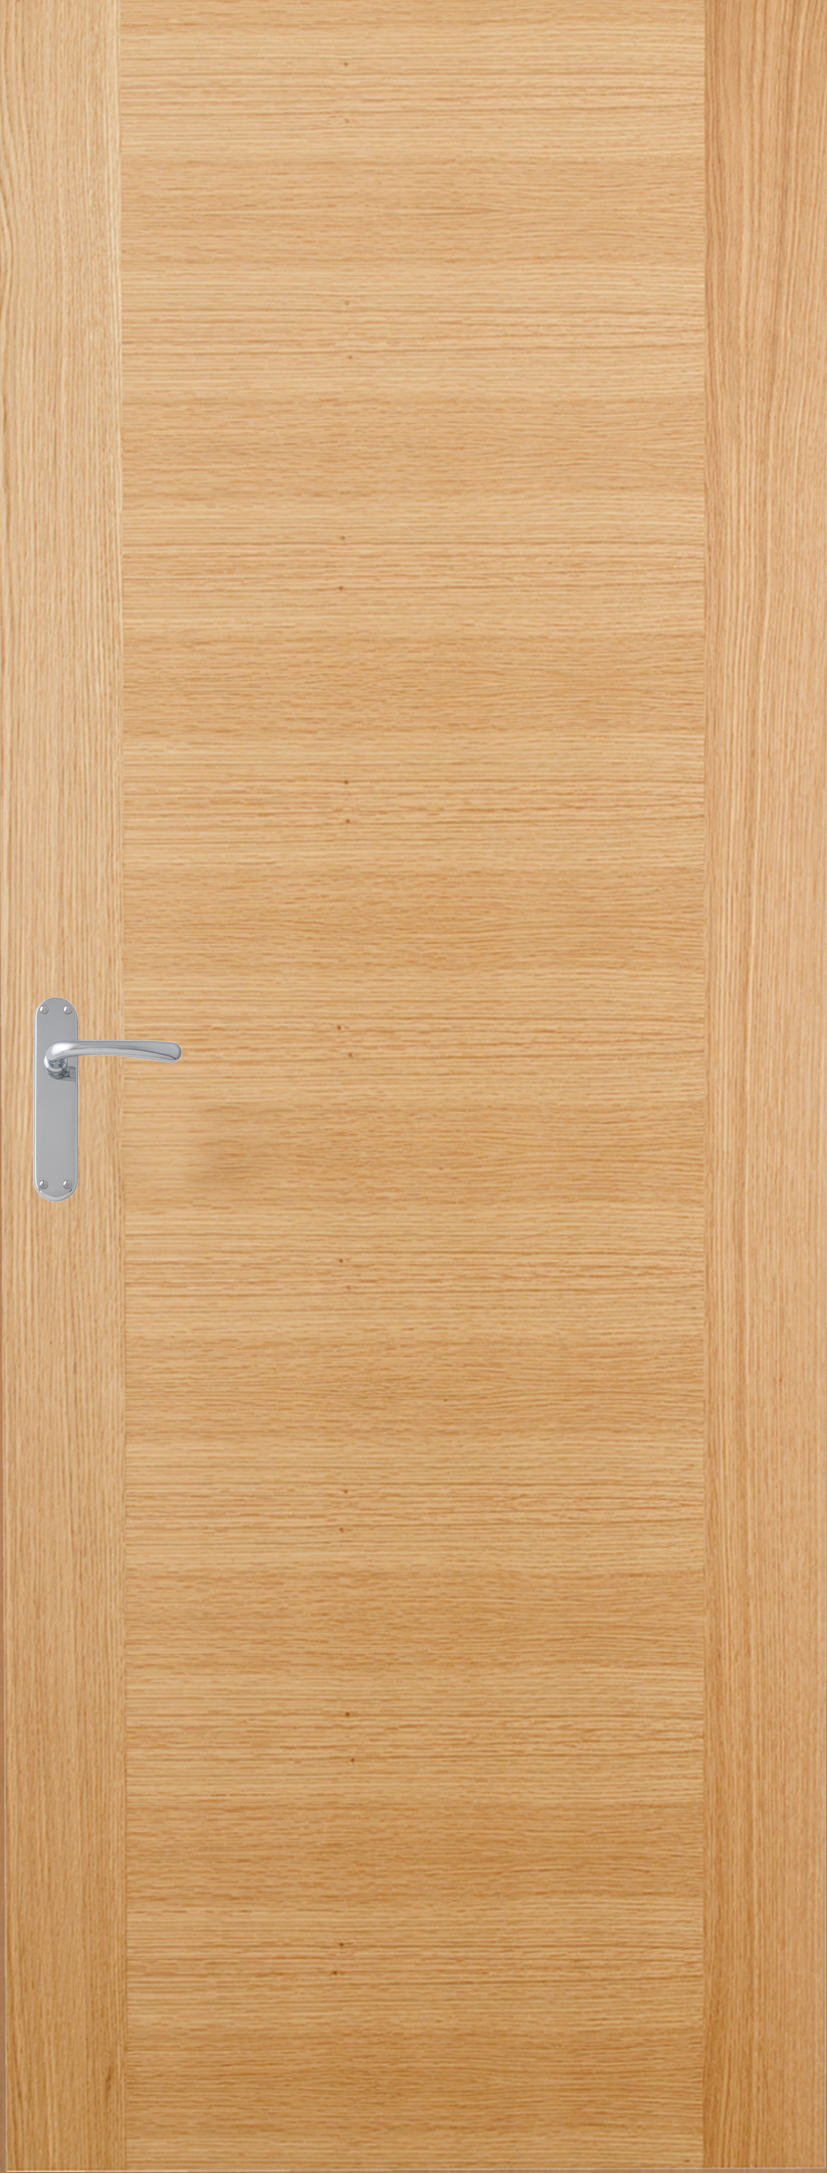 oak 2 stile veneer internal door